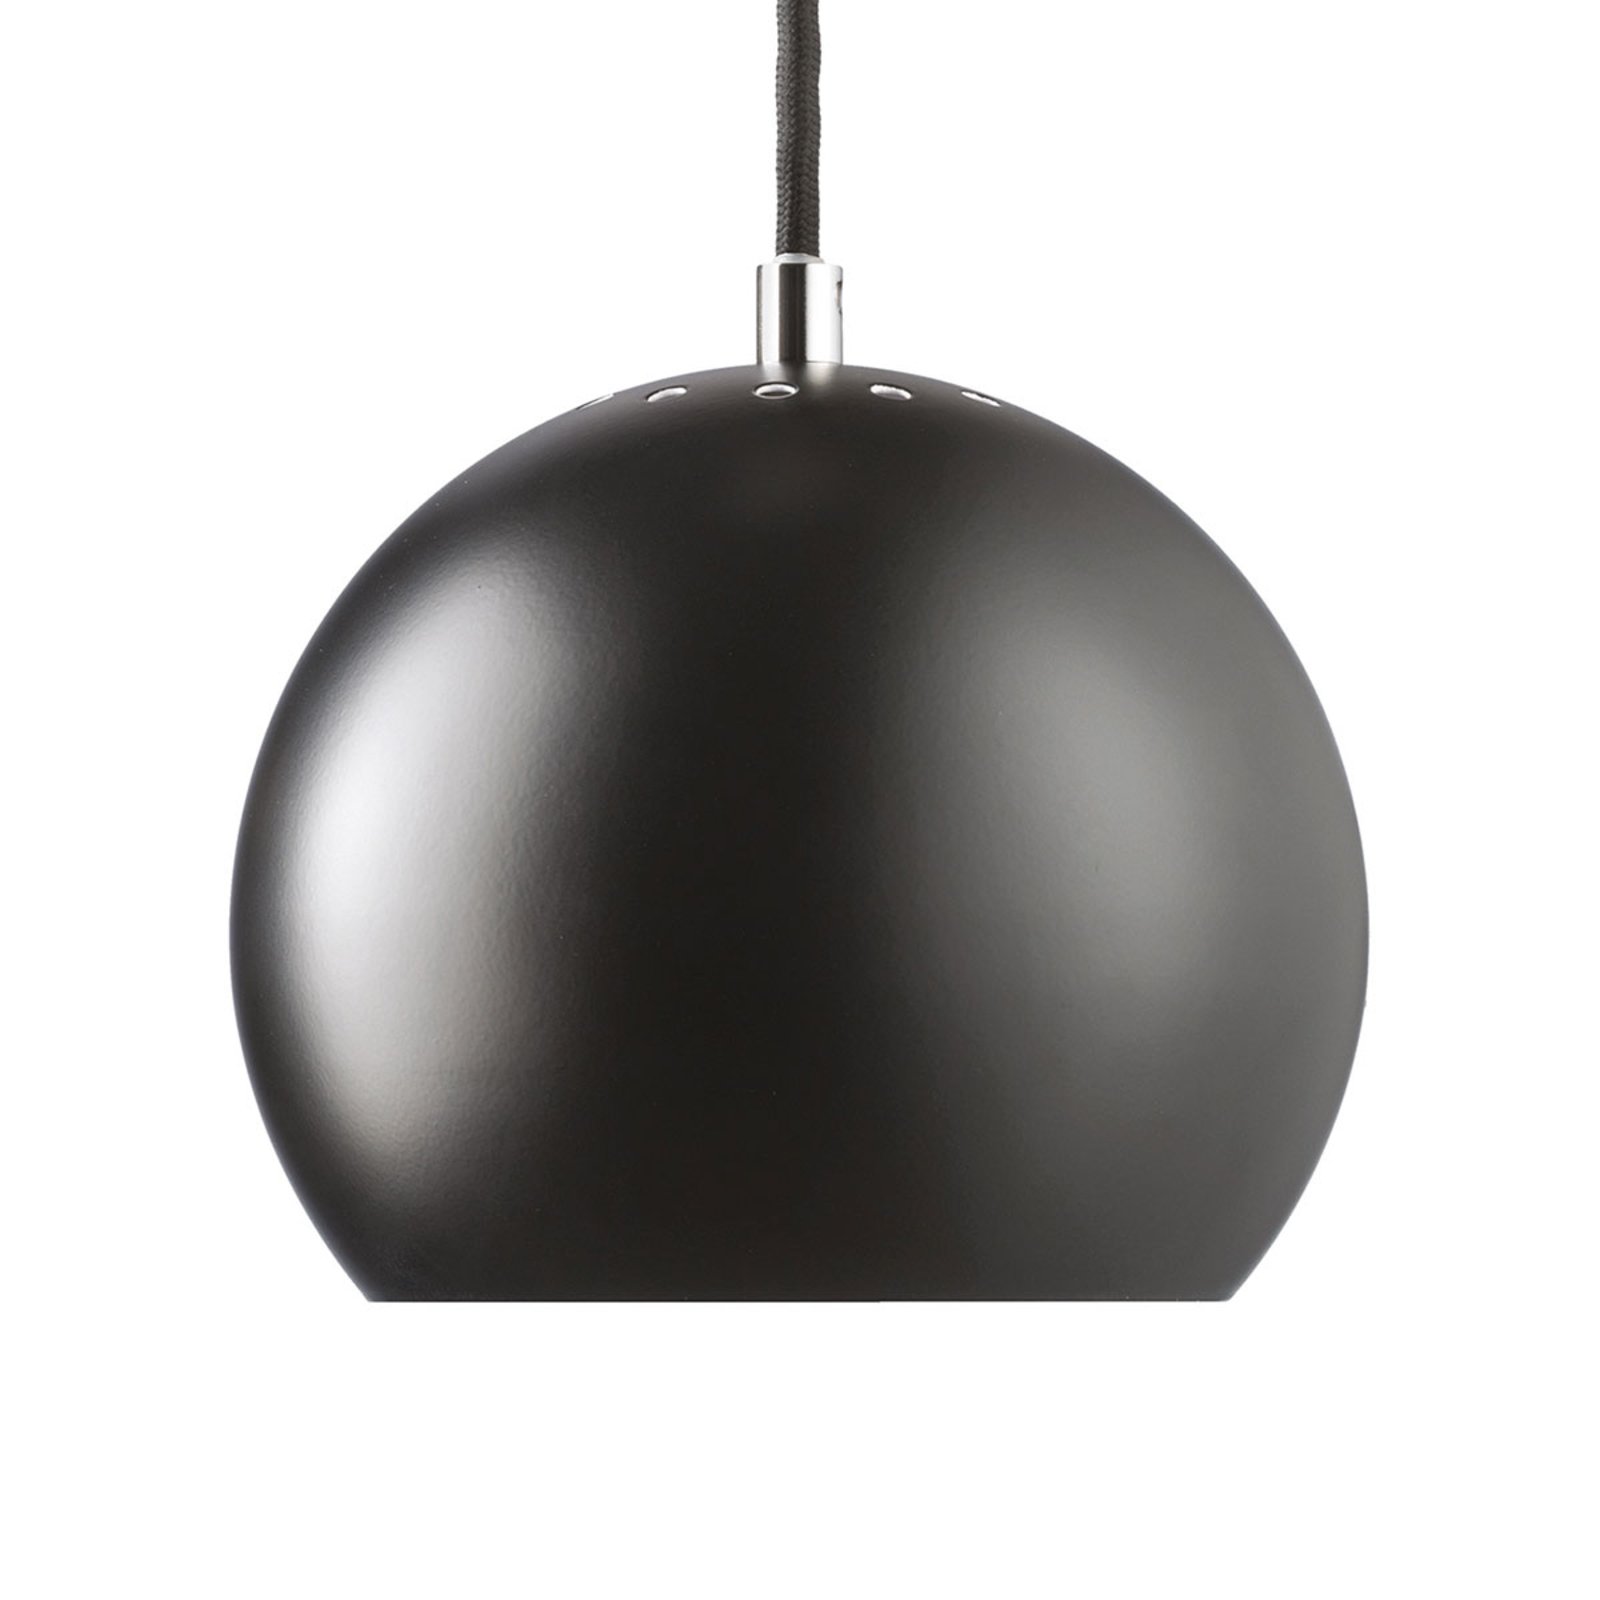 FRANDSEN Ball sospensione, Ø 18 cm, nero satinato